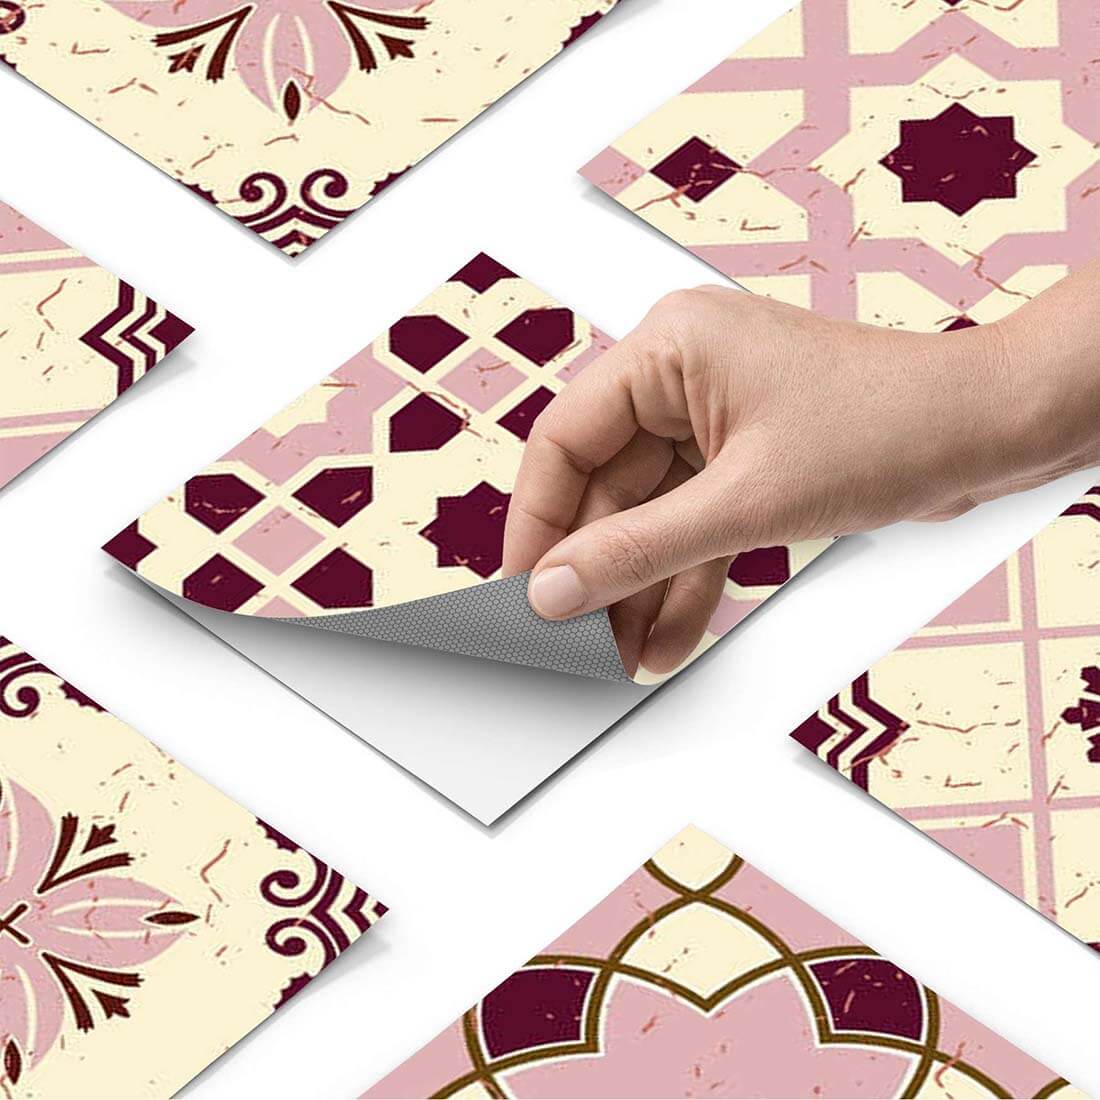 Klebefliesen Mediterranean Tile Set - Red Purple - Paket - creatisto pds1